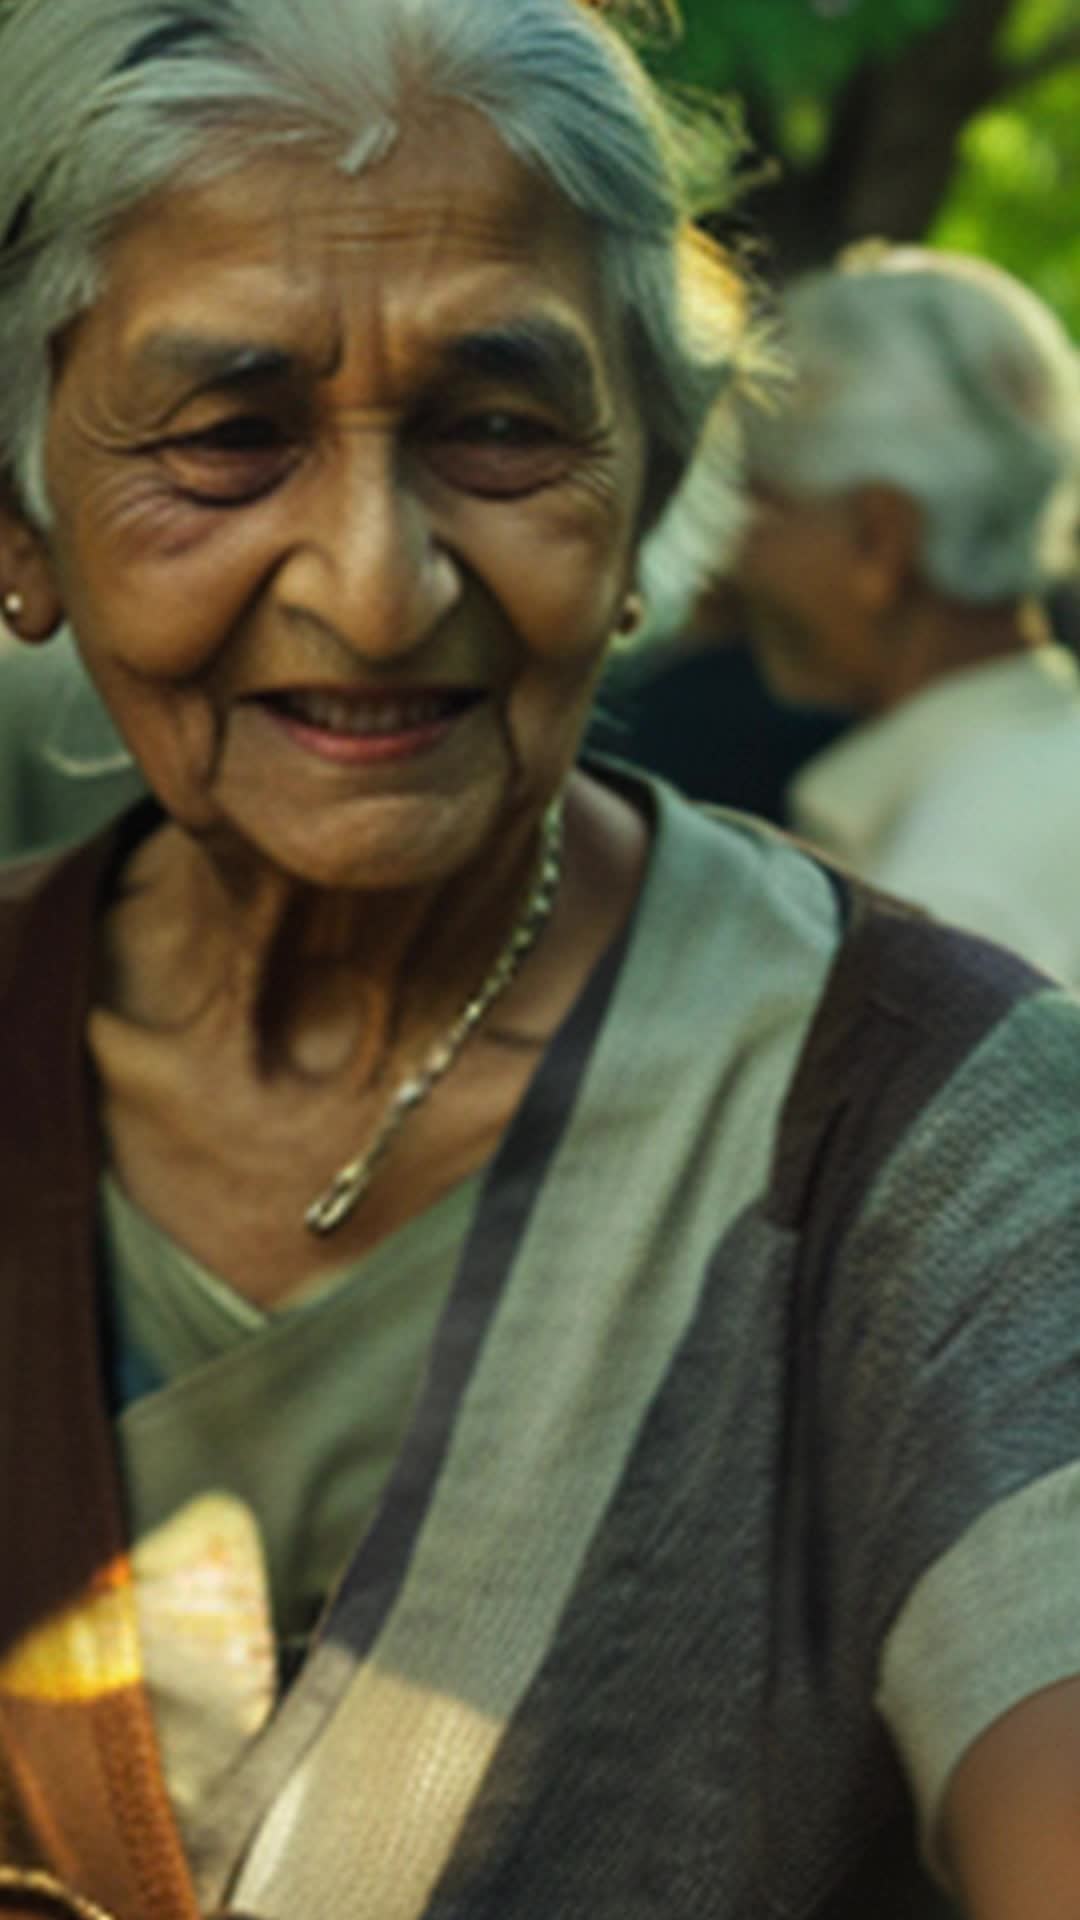 Harish Kumar handing back stolen chain to old lady, grateful expression, close-up, heartwarming moment, soft focus background, gentle sunbeams, warmly lit scene, high detail, vivid color